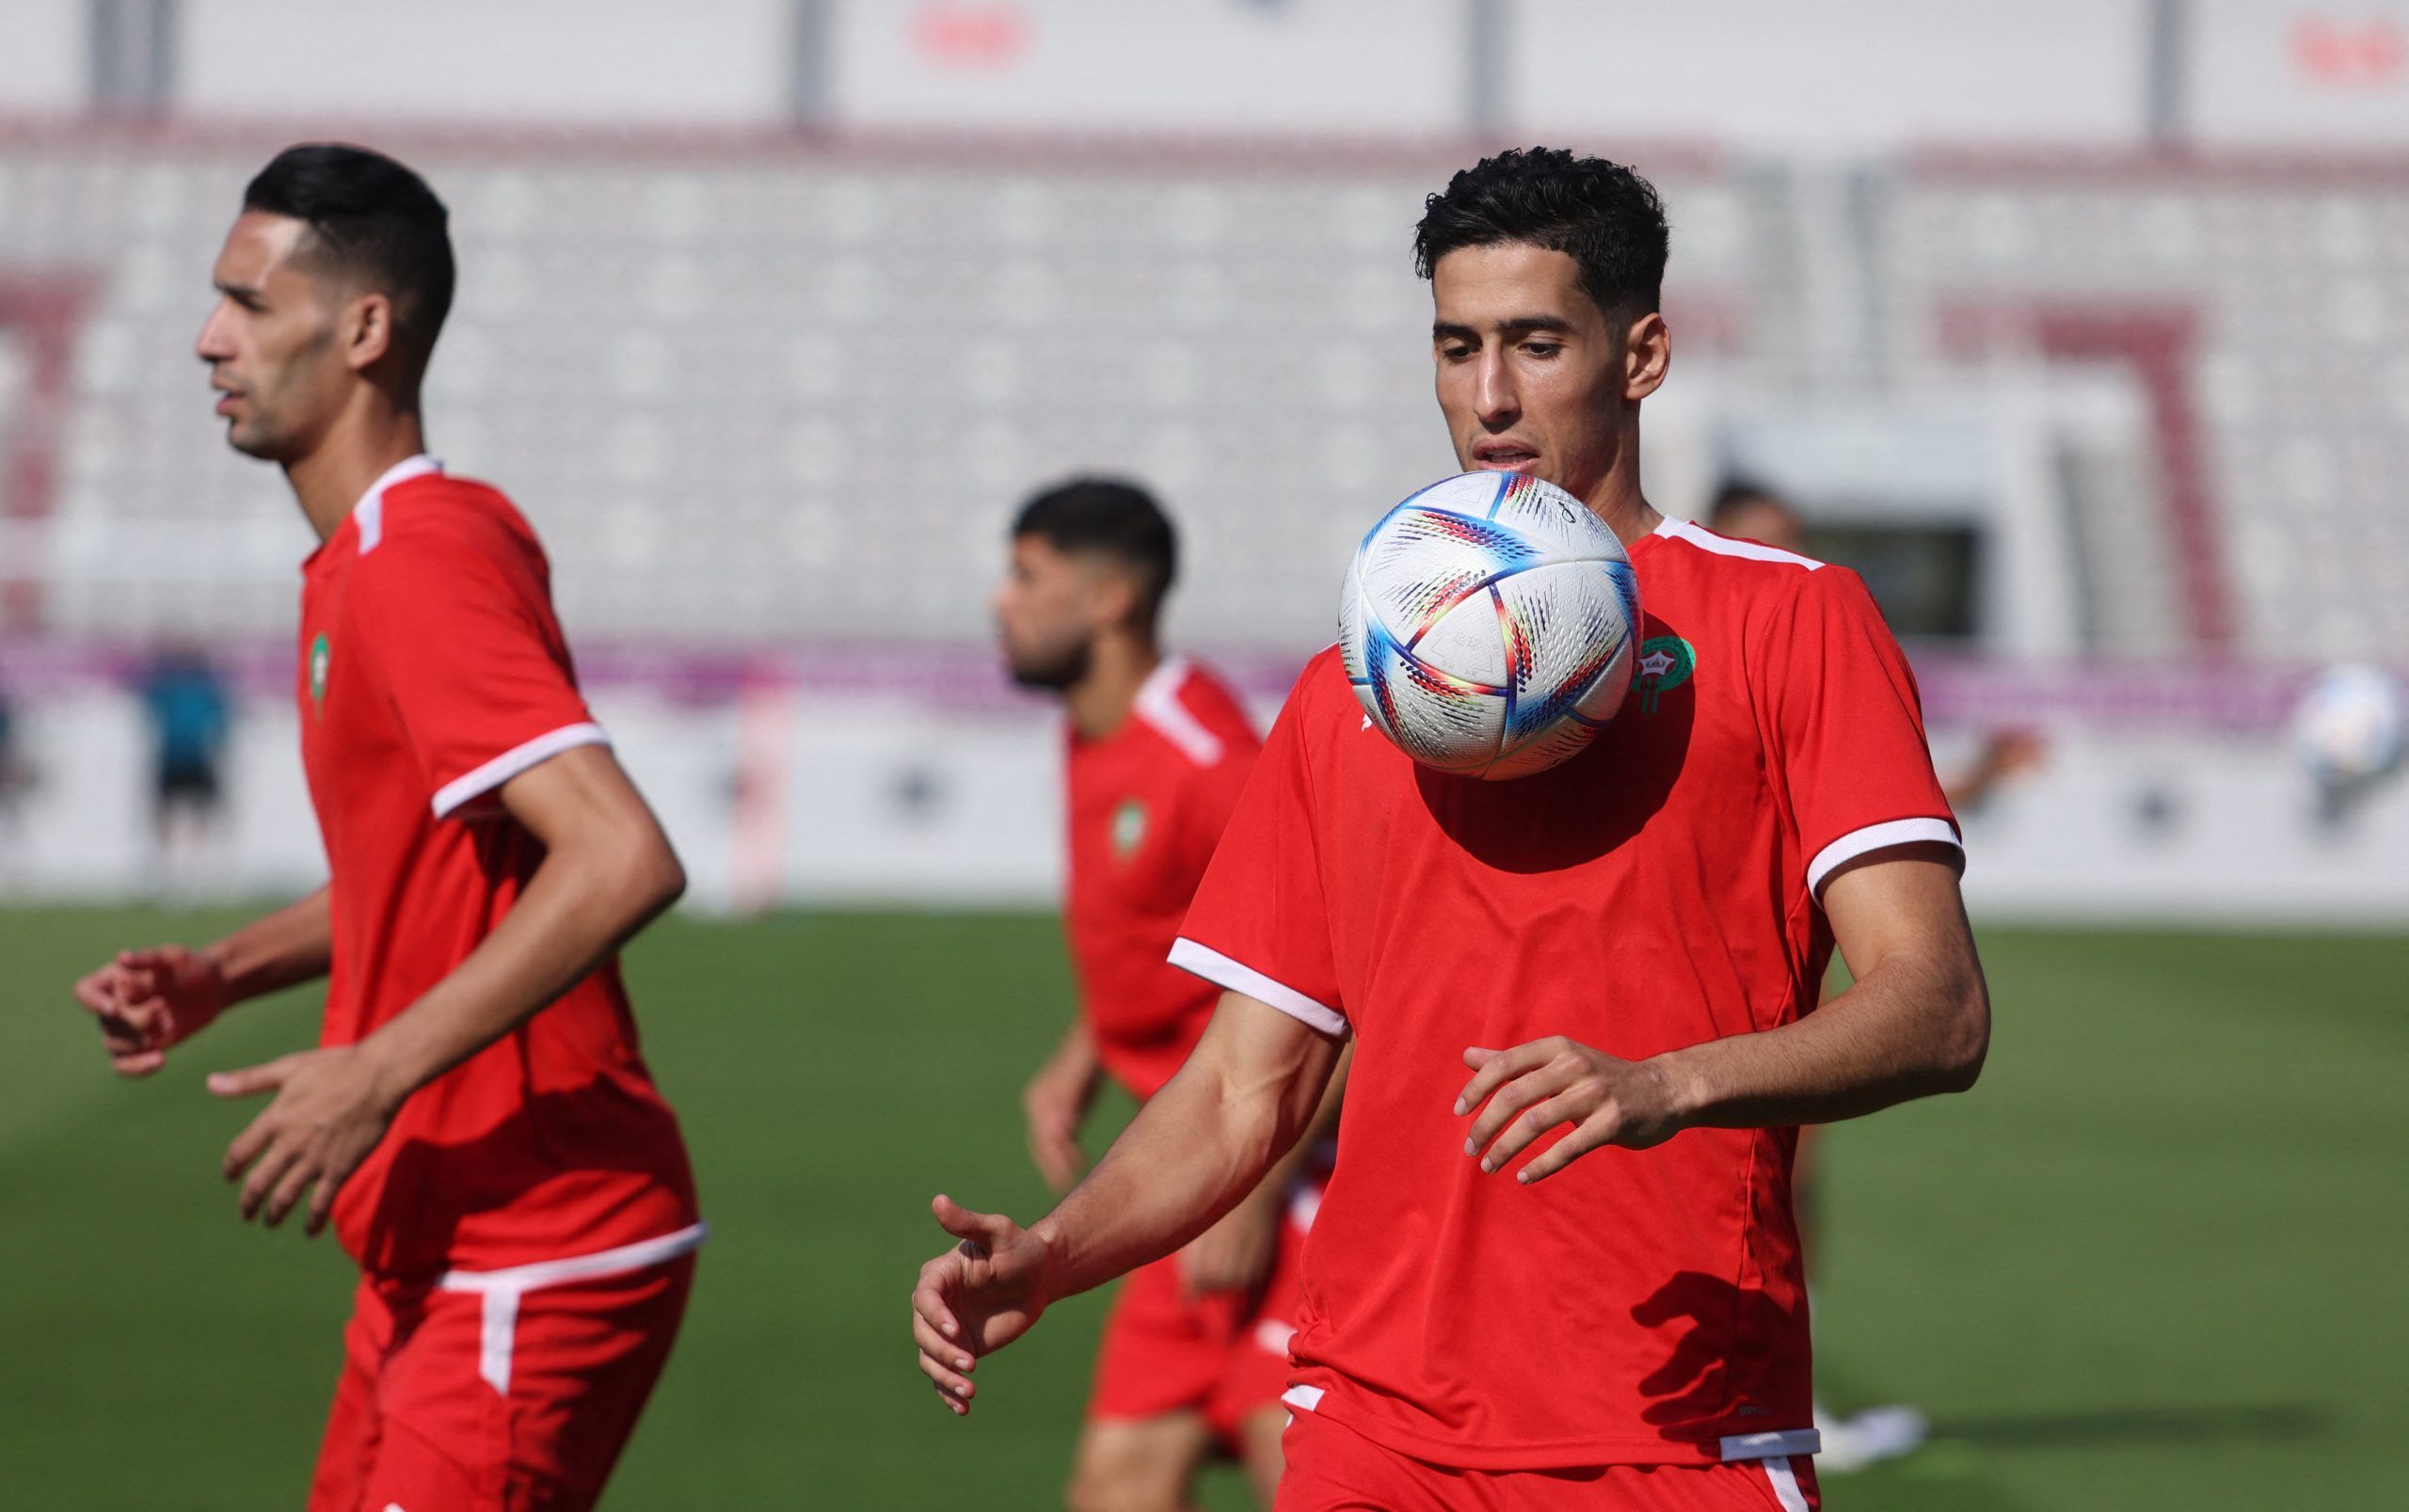 Soccer Football - FIFA World Cup Qatar 2022 - Morocco Training - Al Duhail SC Stadium, Doha, Qatar - November 22, 2022 Morocco's Nayef Aguerd during training REUTERS/Amanda Perobelli